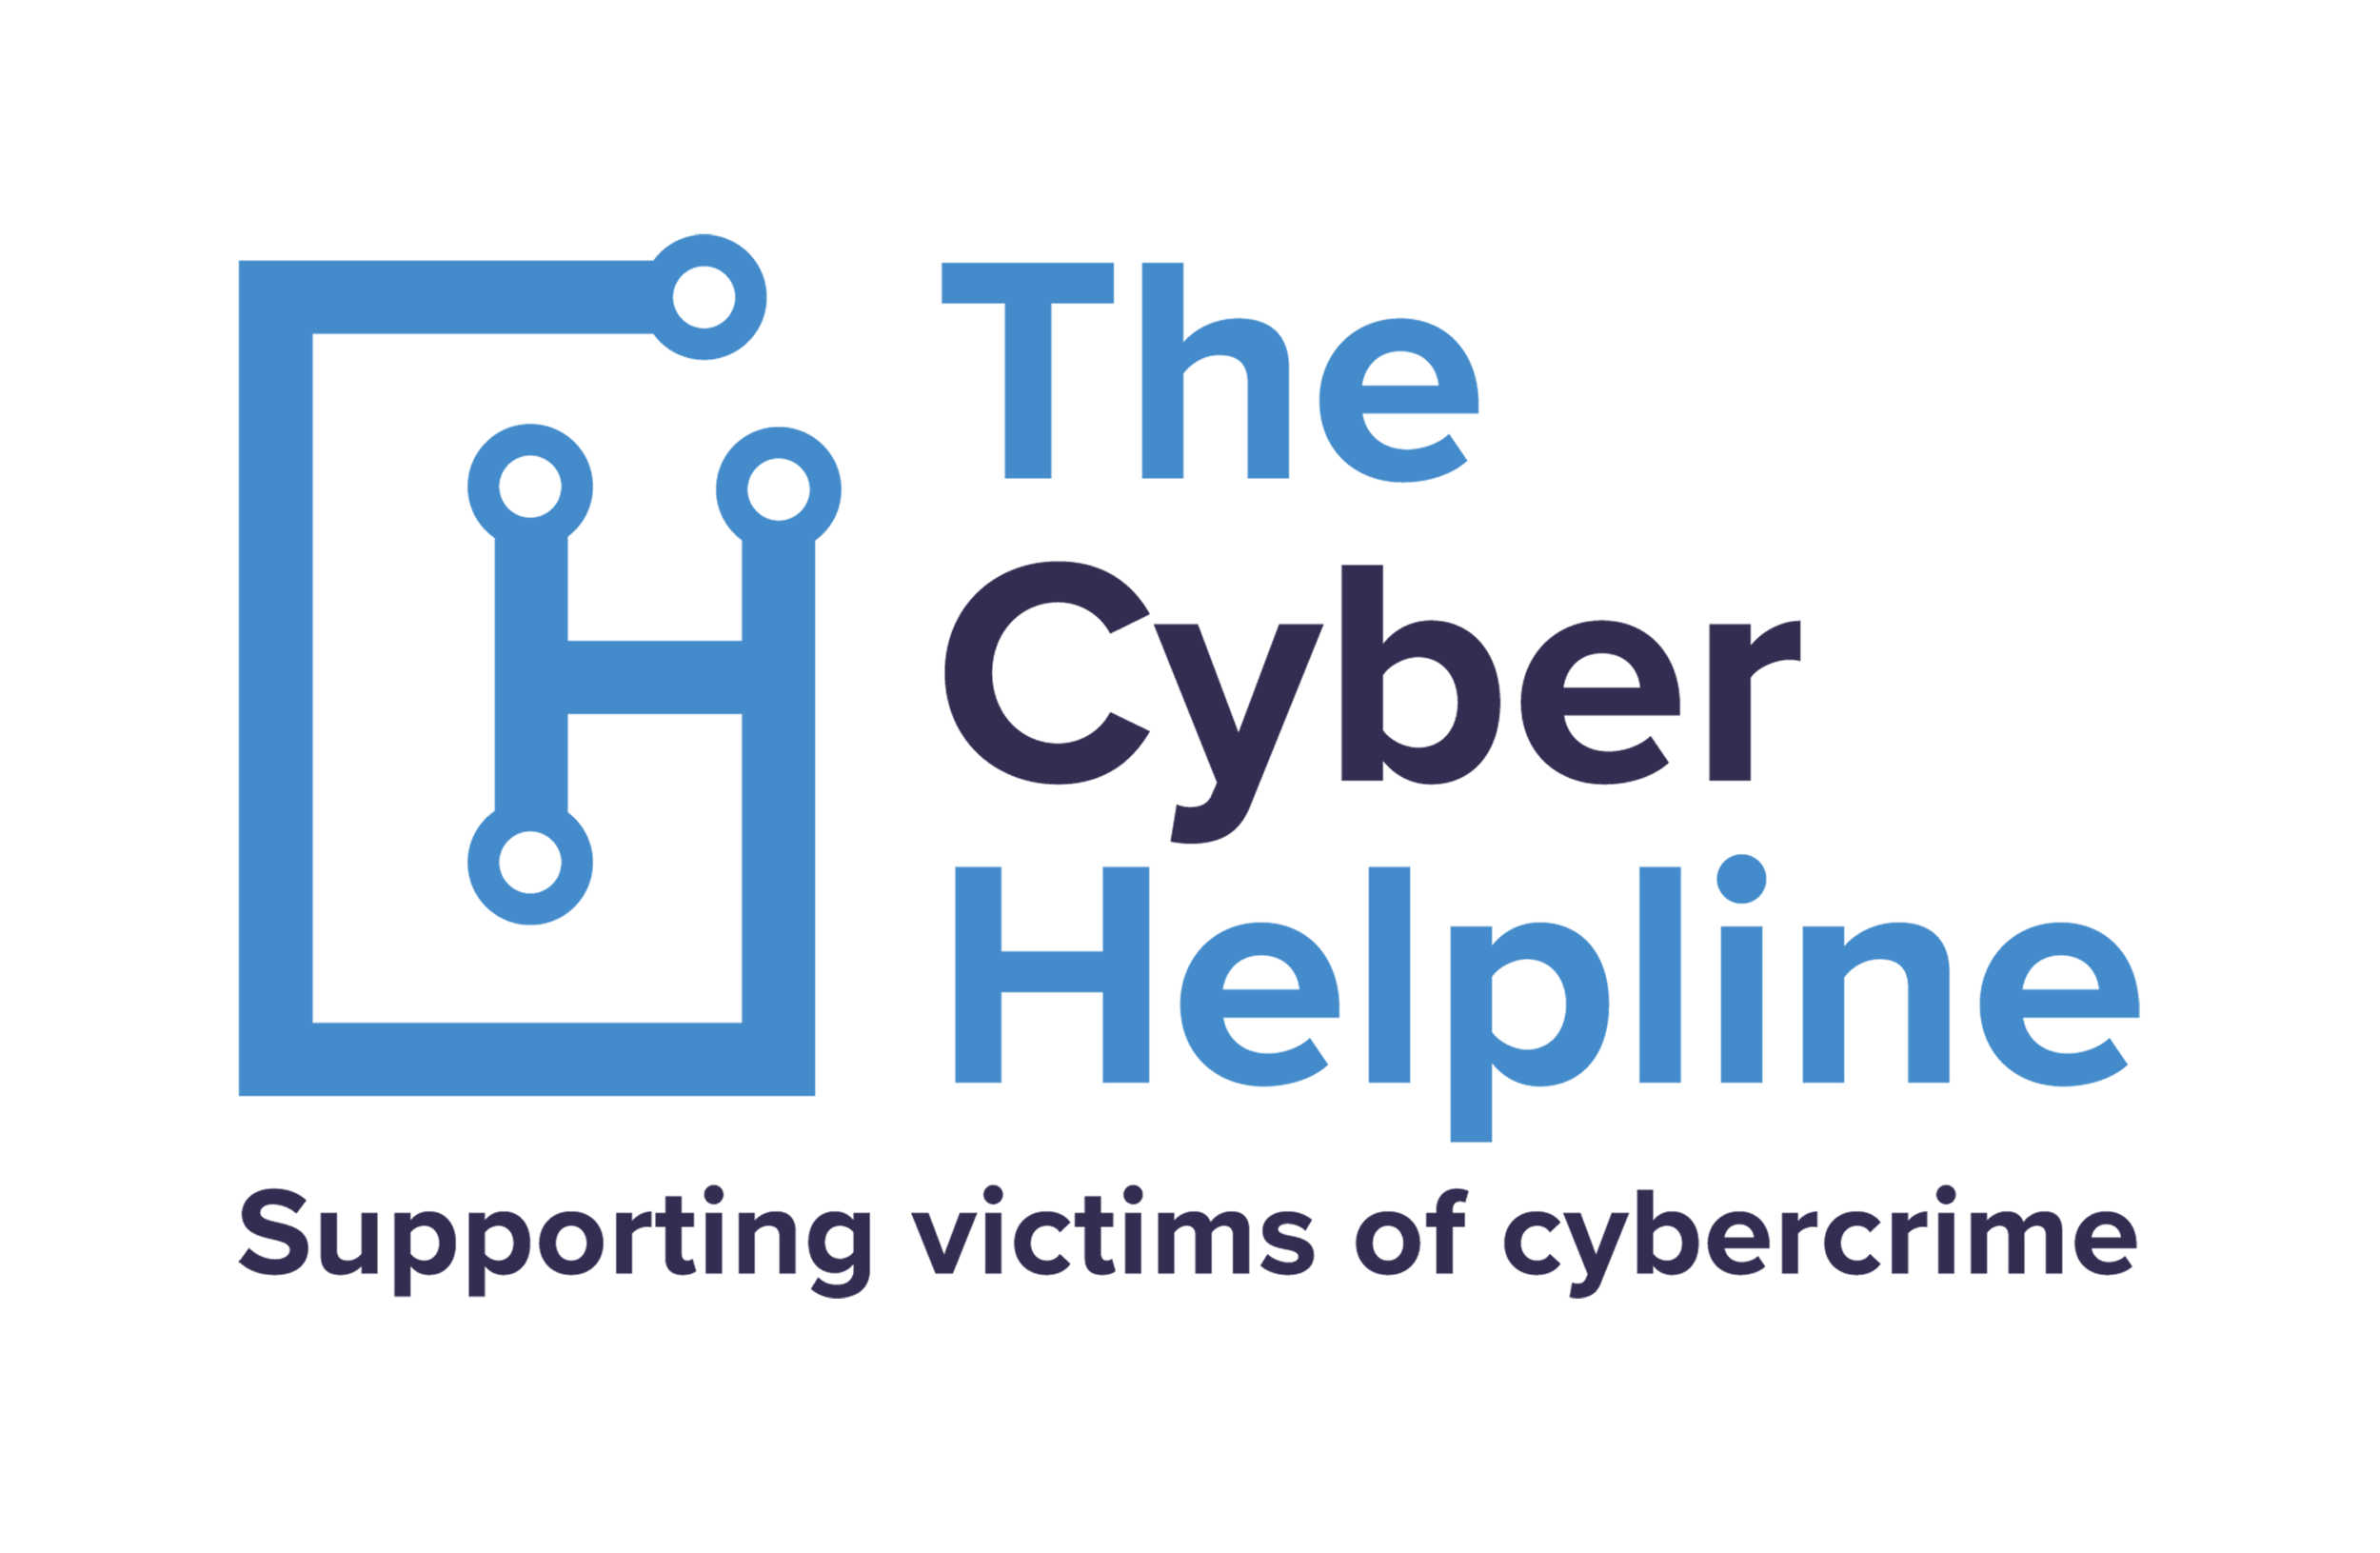 The Cyber Helpline